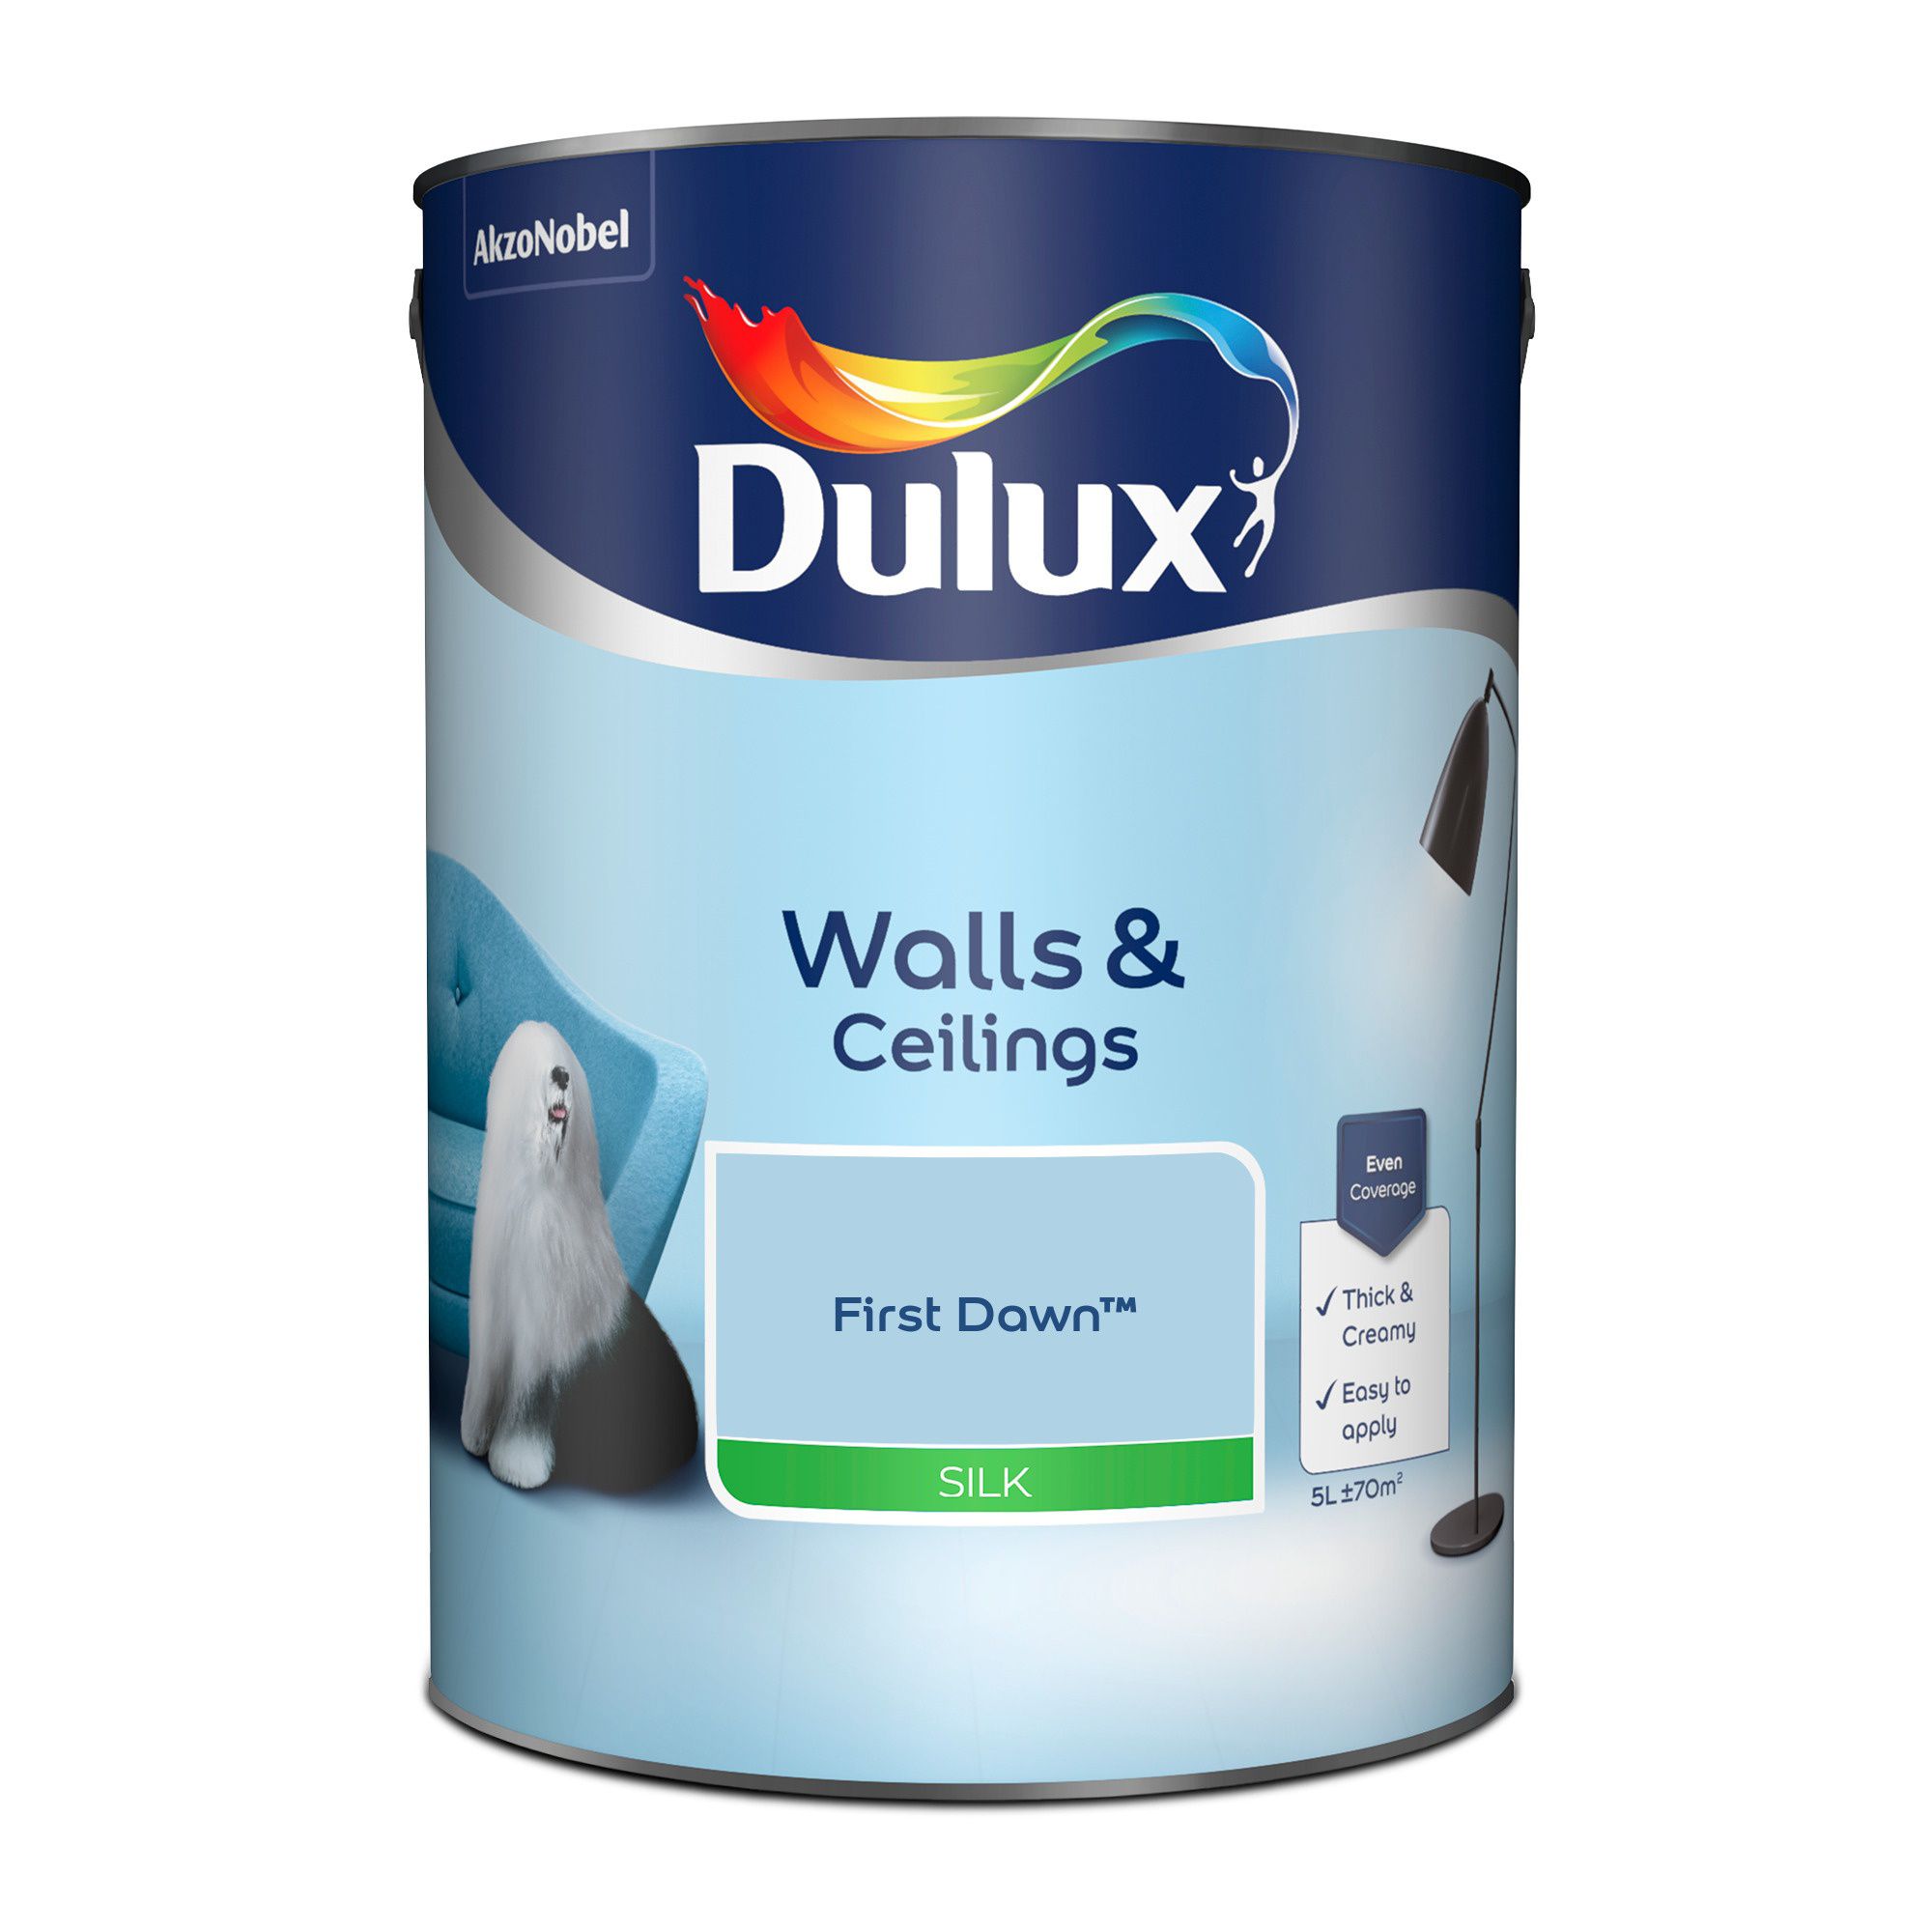 Dulux Walls & ceilings First dawn Silk Emulsion paint, 5L